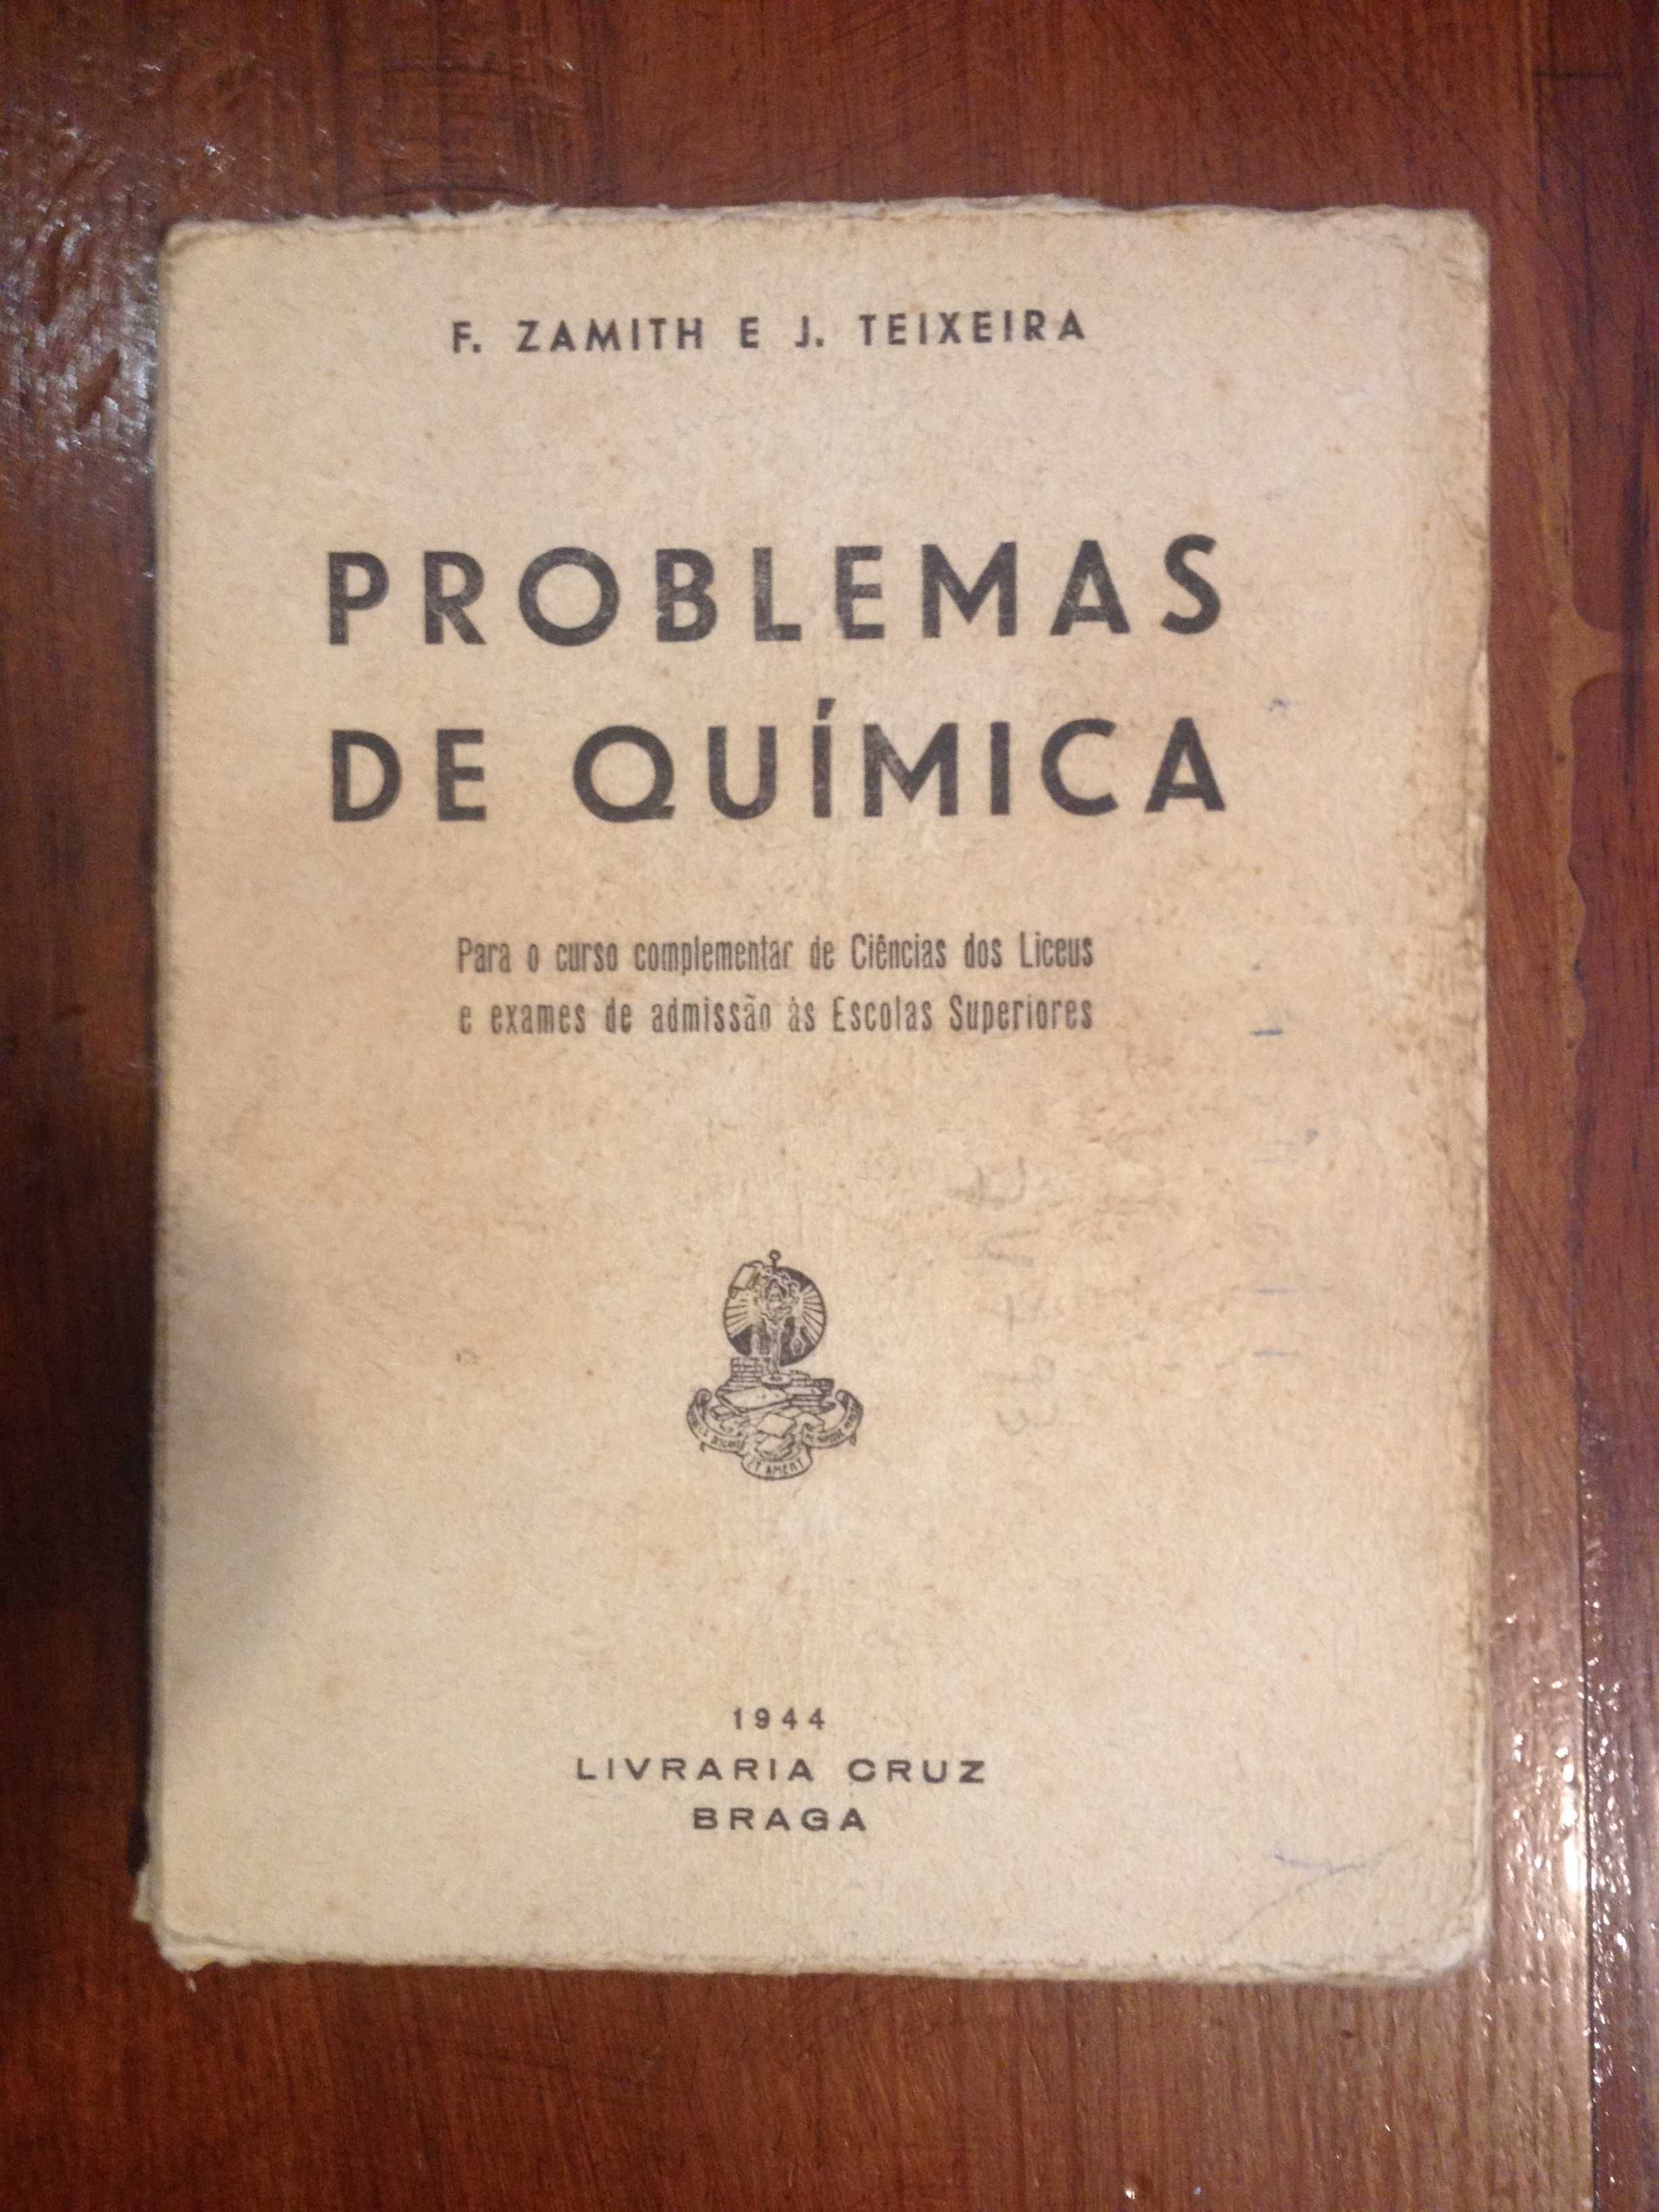 F. Zamith e J. Teixeira - Problemas de química